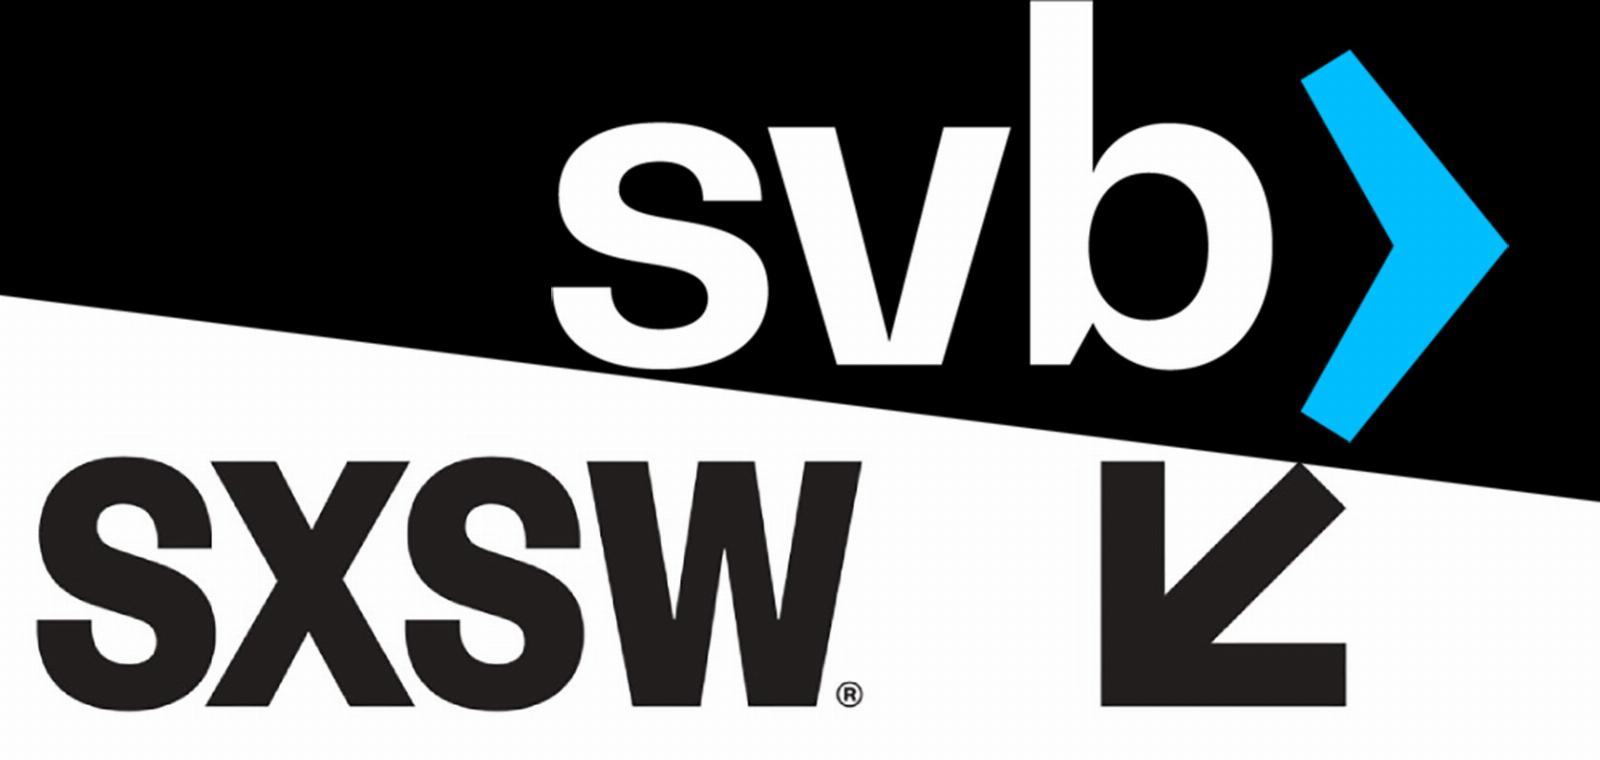 SVB is already the talk of SXSW